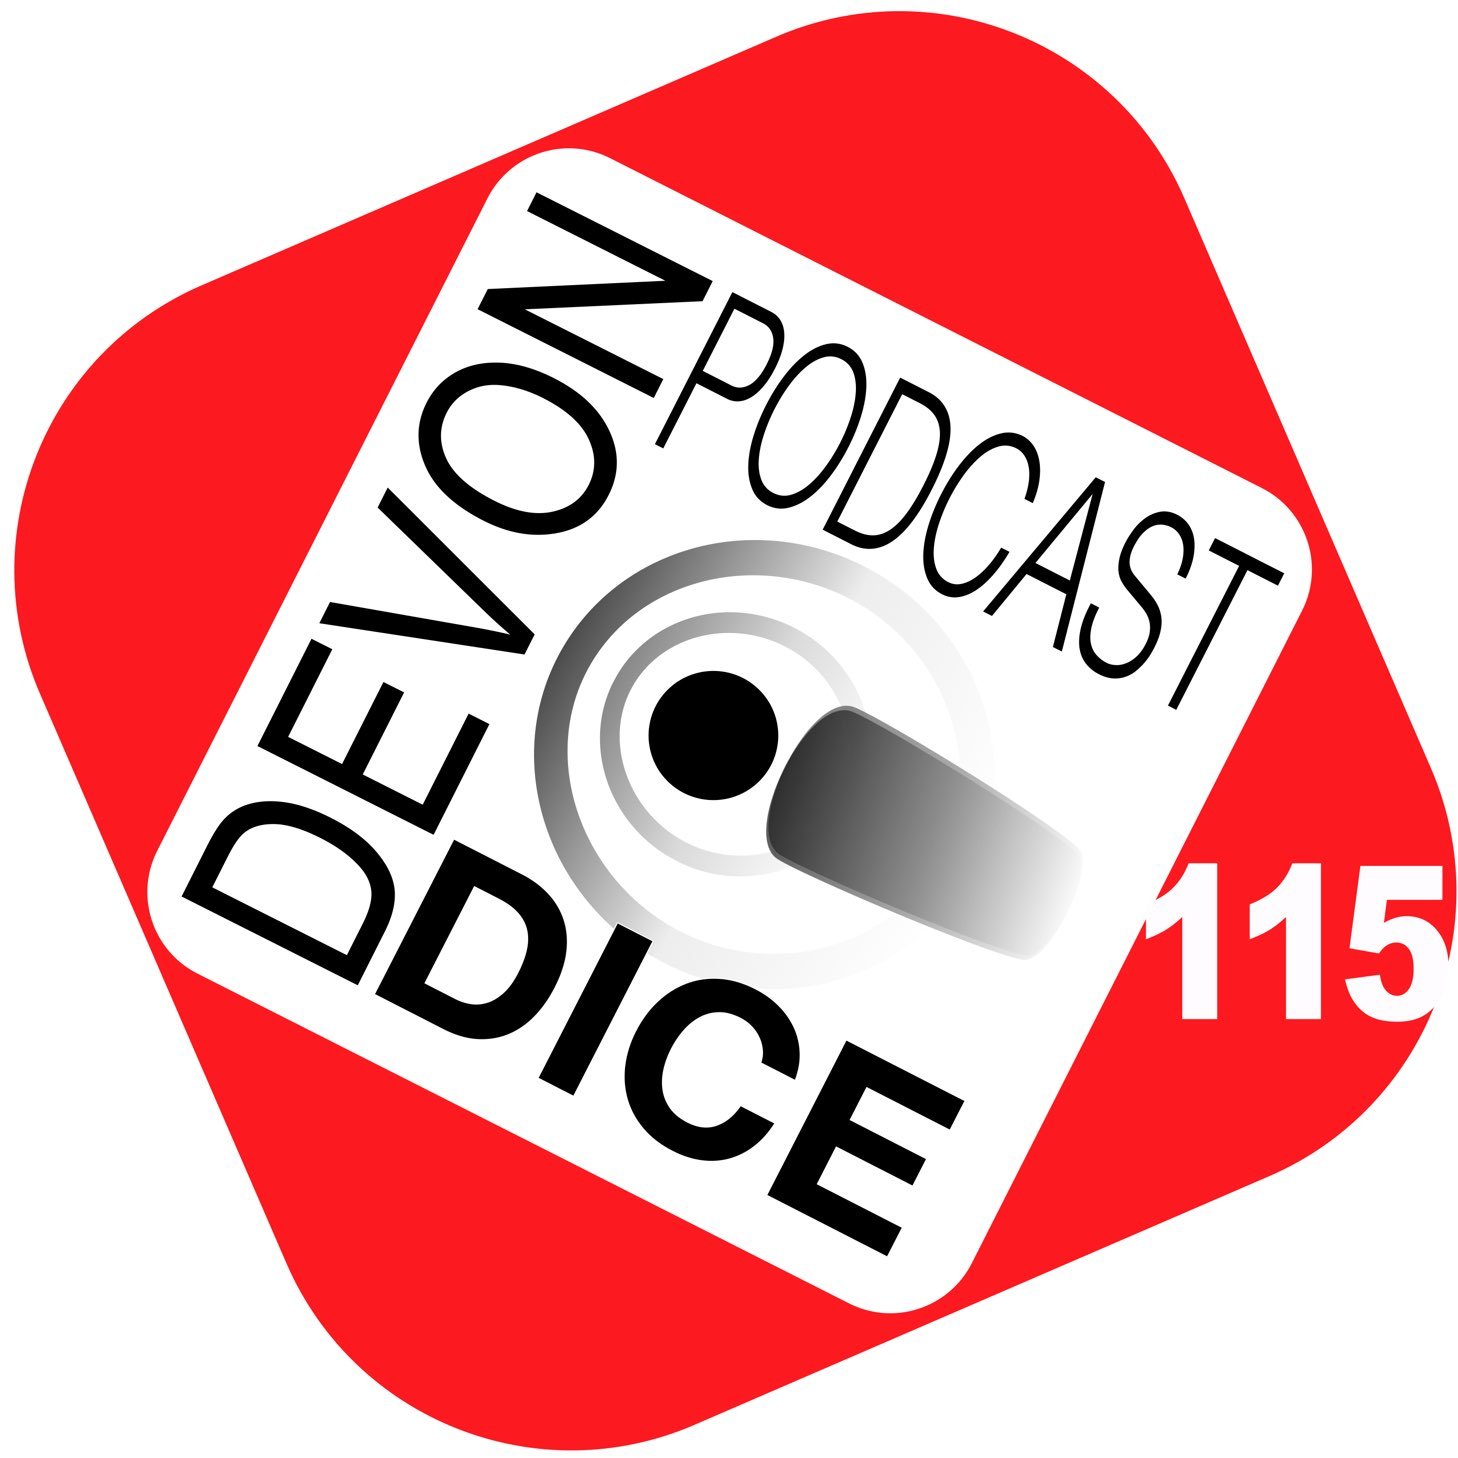 115 Devon Dice Podcast